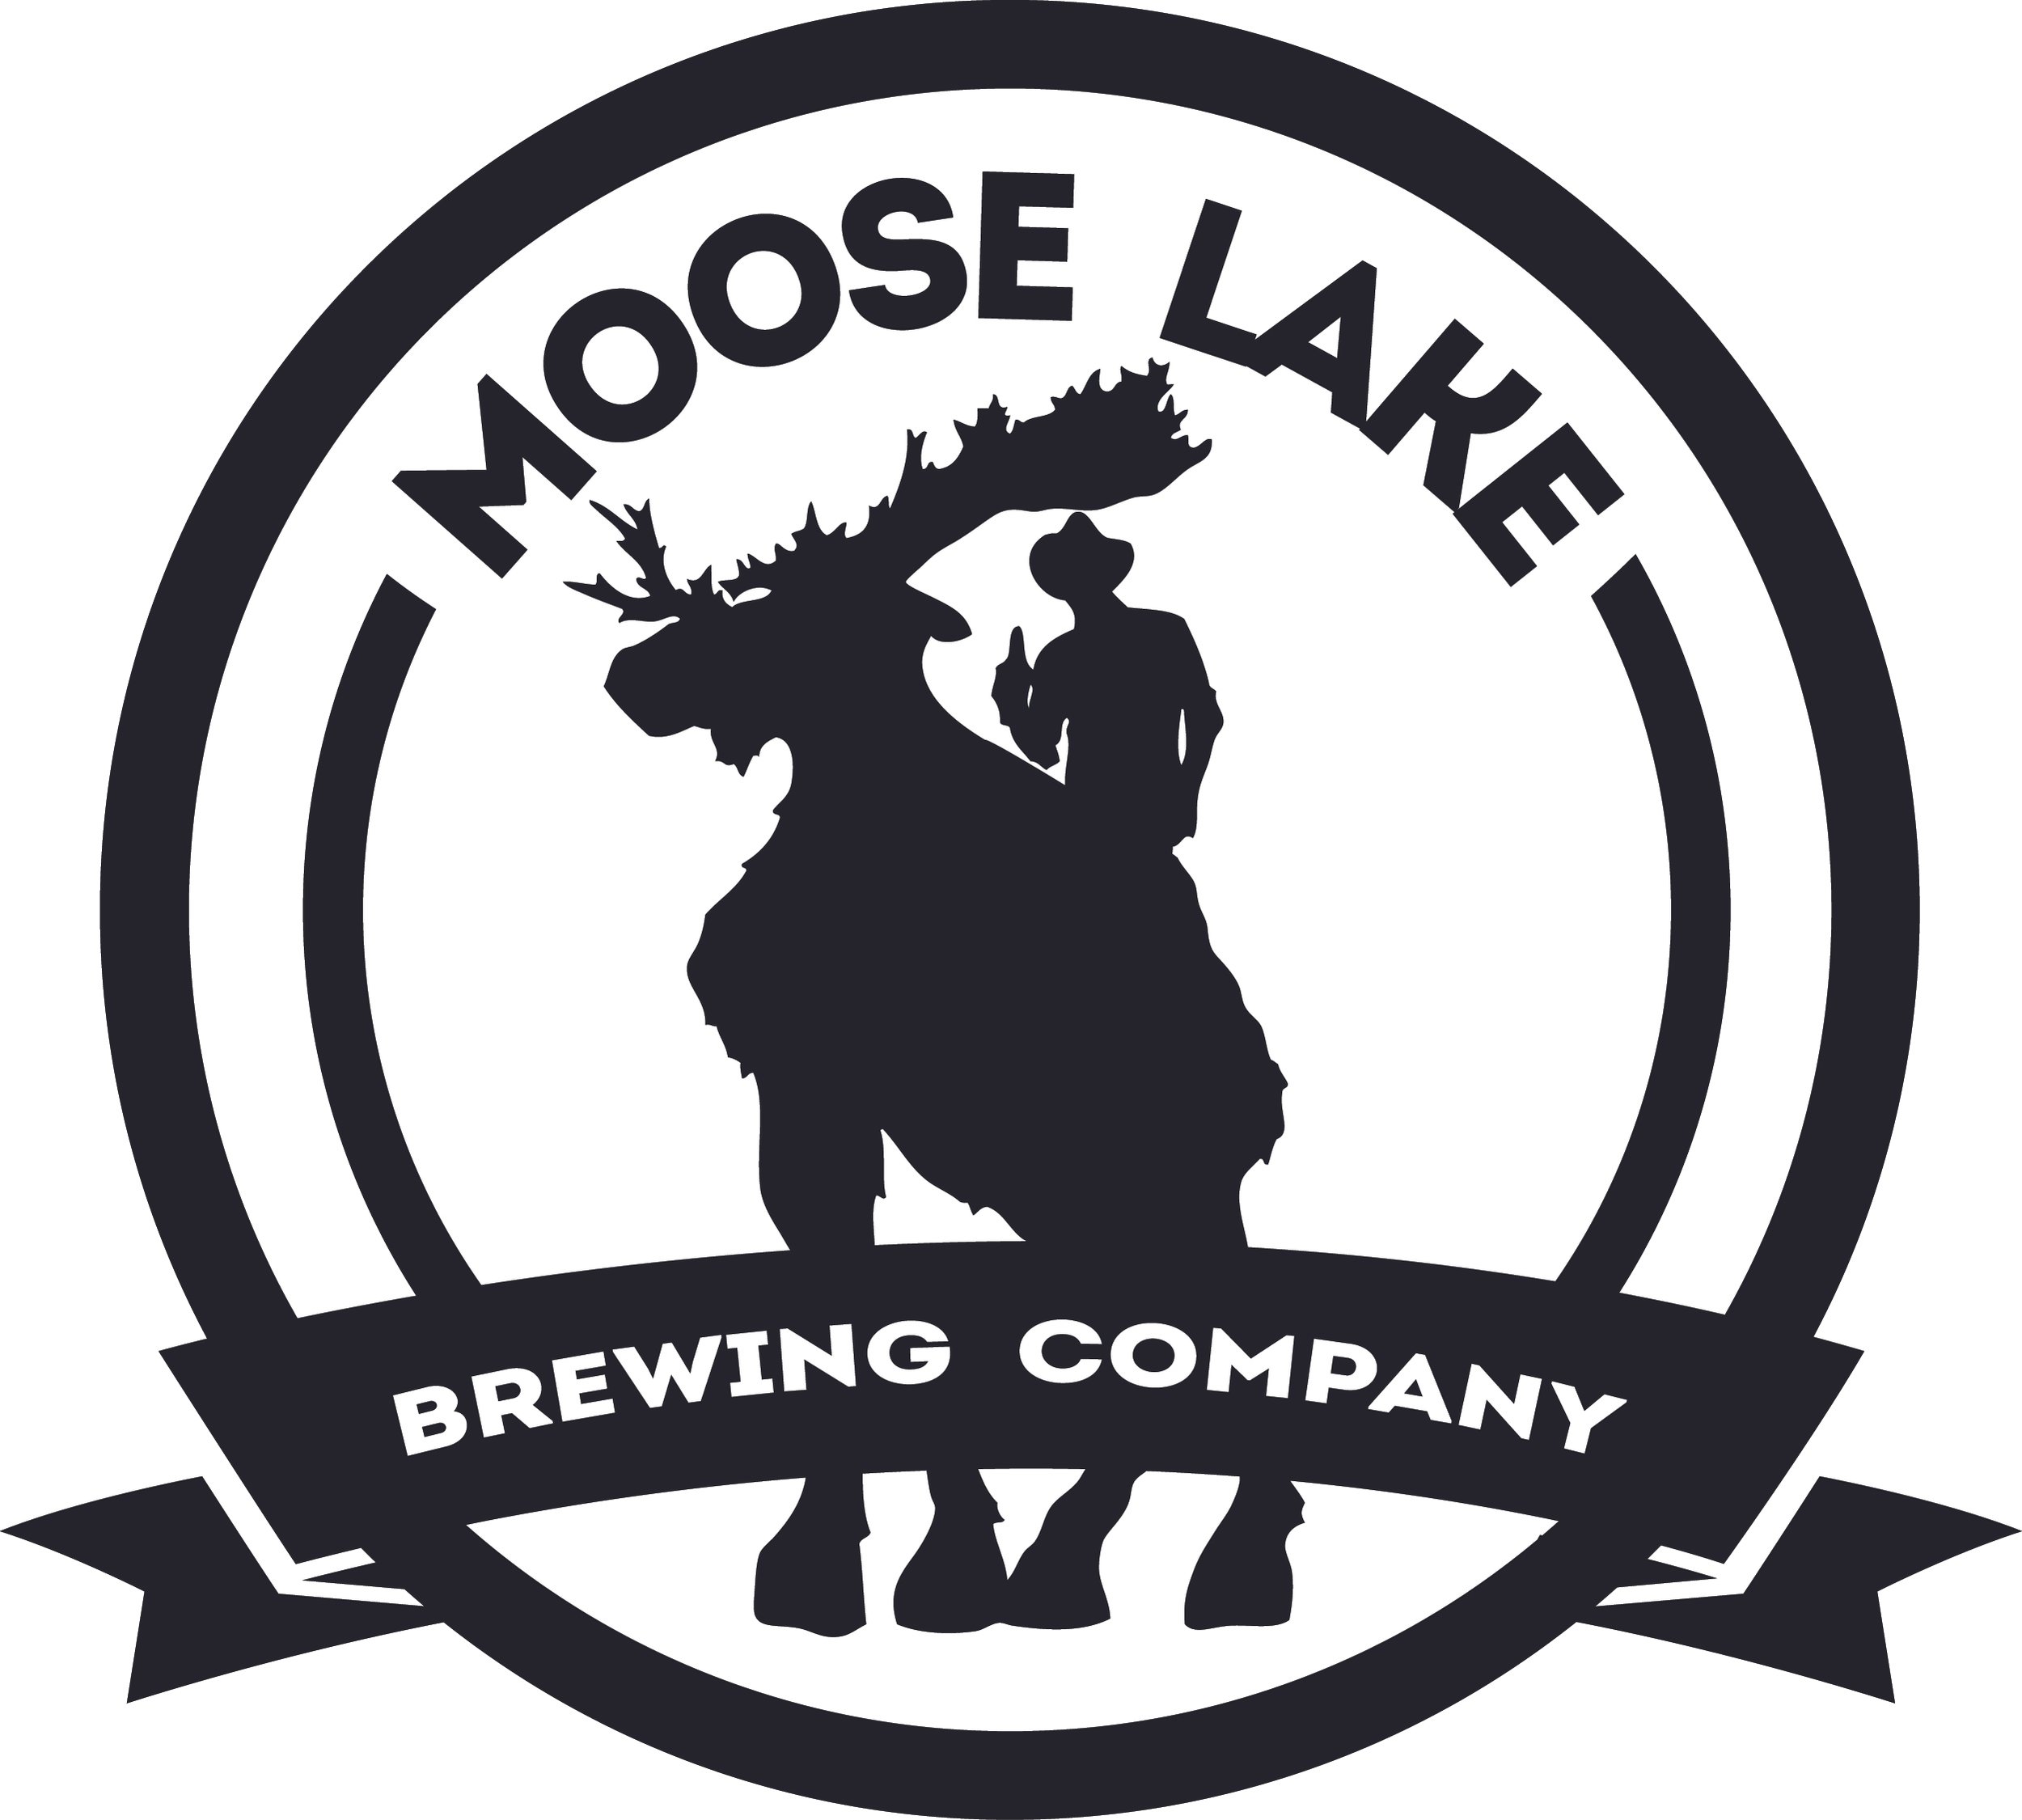 MooseLake Brewing Logo.jpg